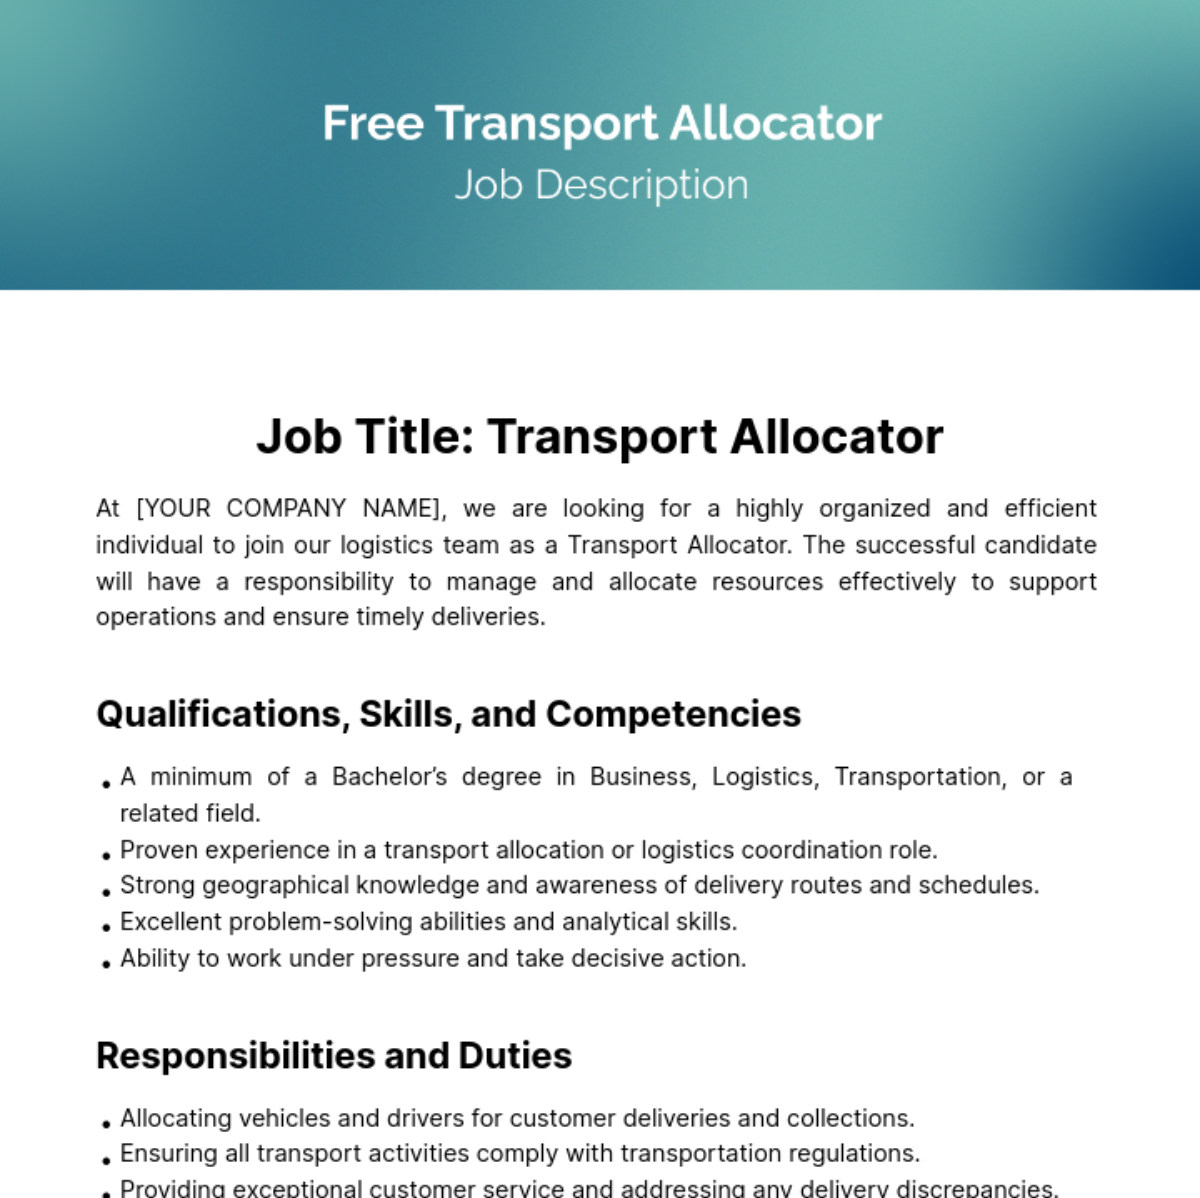 Free Transport Allocator Job Description Template